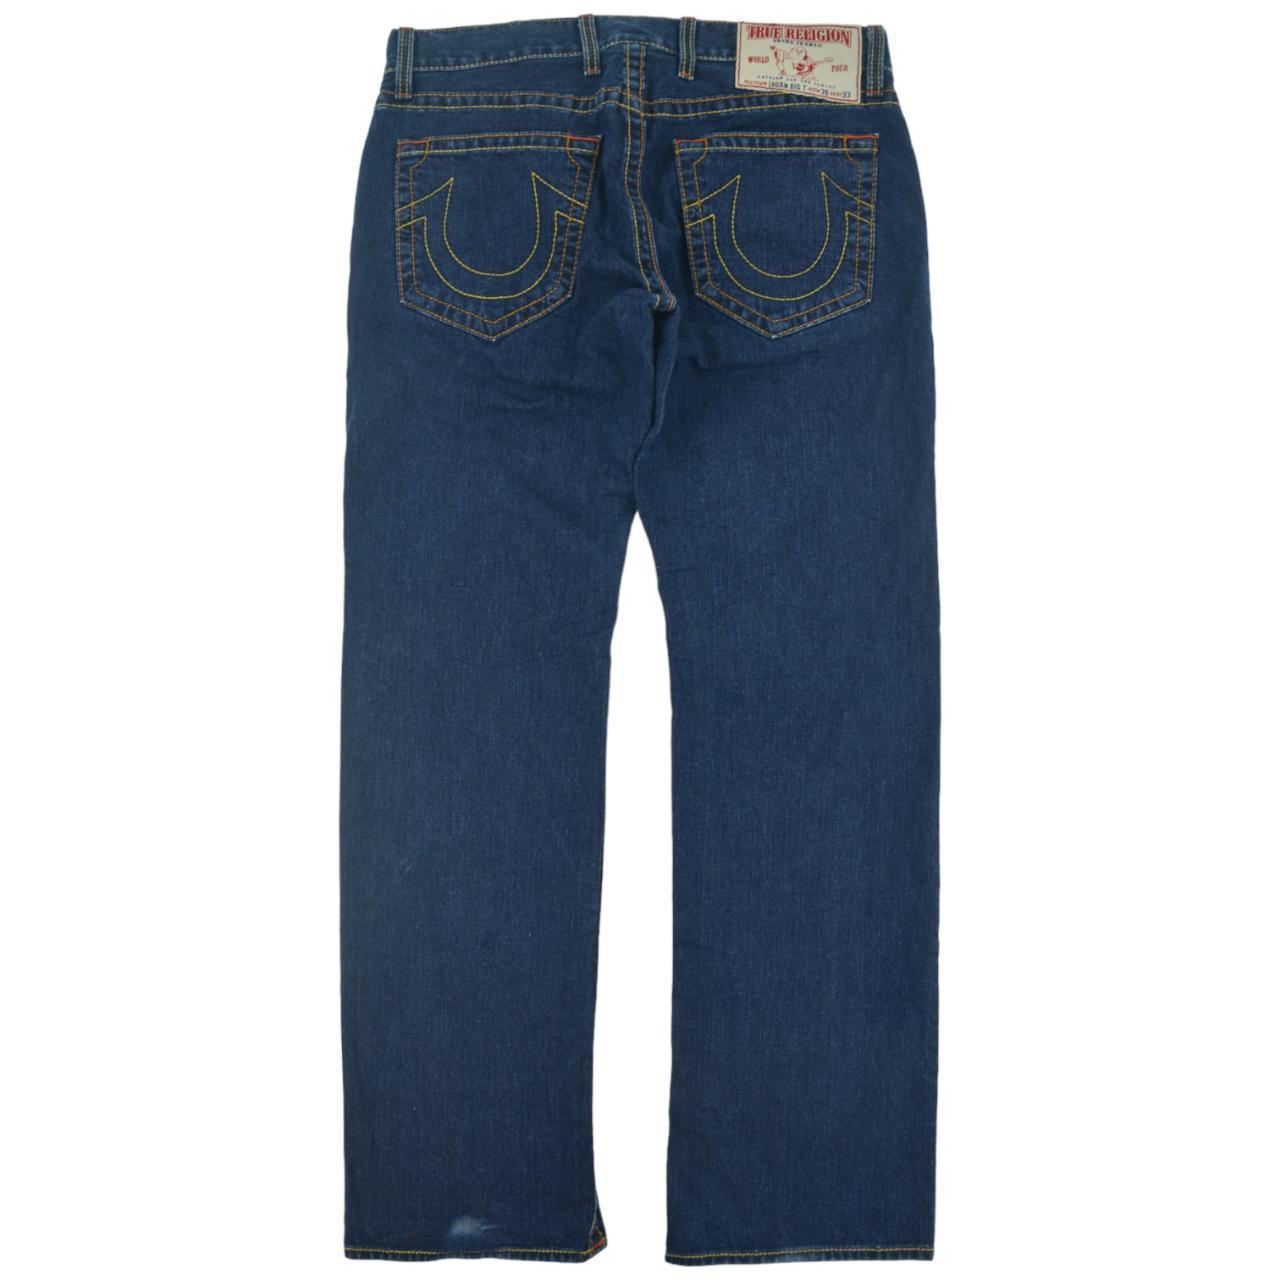 Vintage True Religion Denim Jeans Size W38 - Known Source